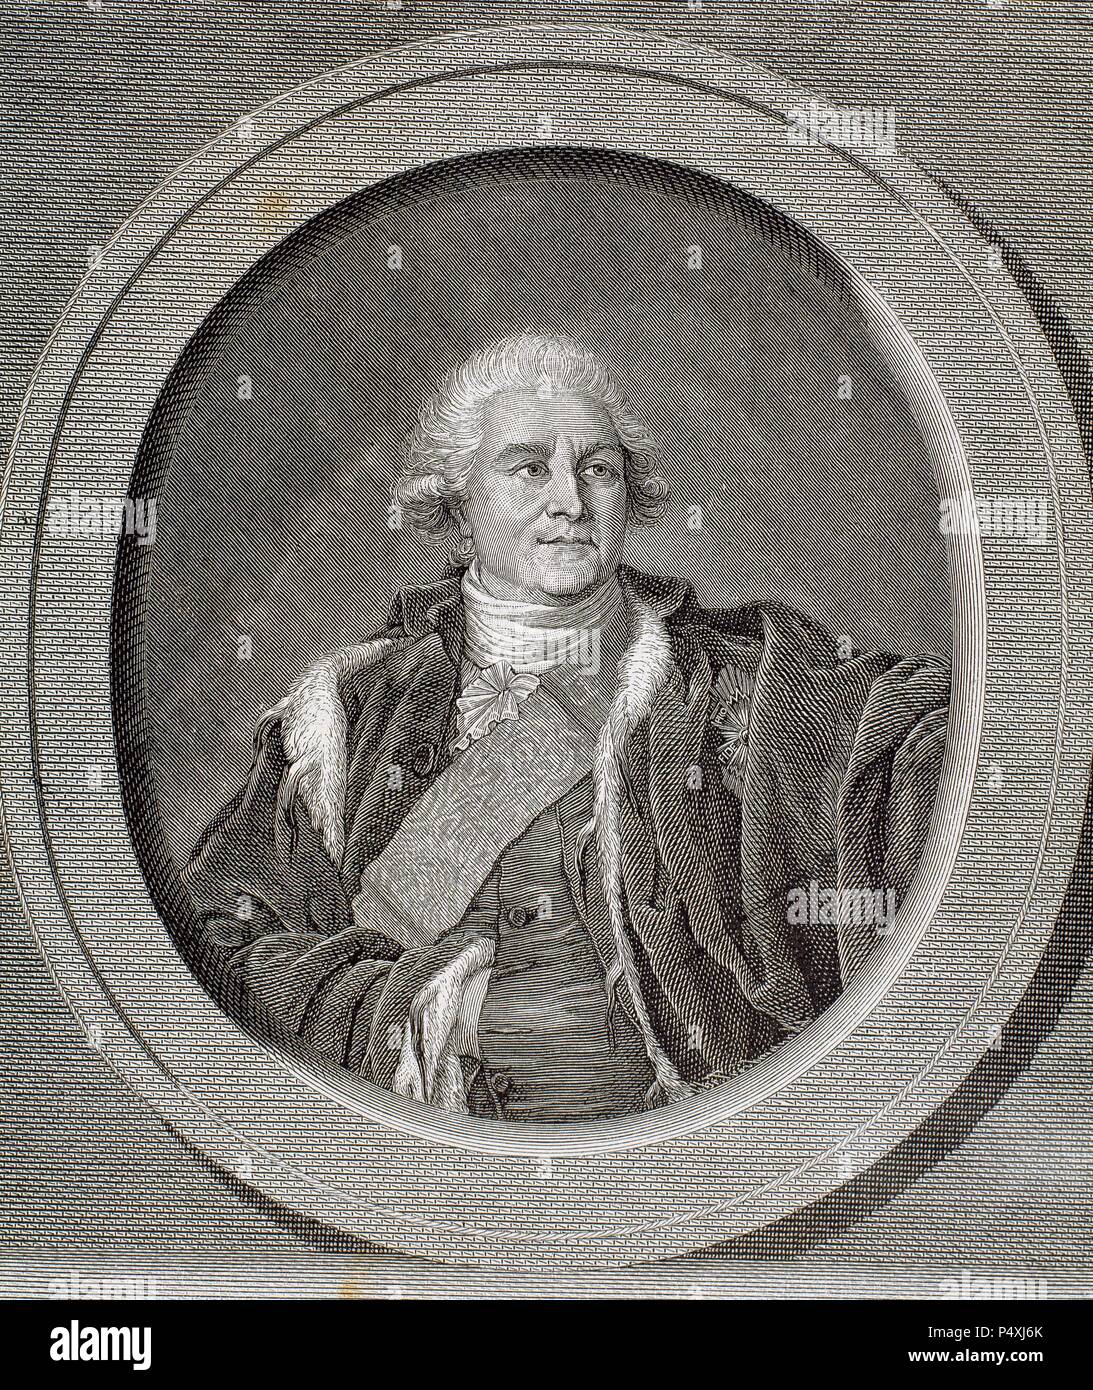 Stanislaus II Poniatowski Augustus (1732-1798). Last King of Poland (1764-1795). Abdicated in 1795 (third division of Poland). Engraving byTreibmann. Stock Photo